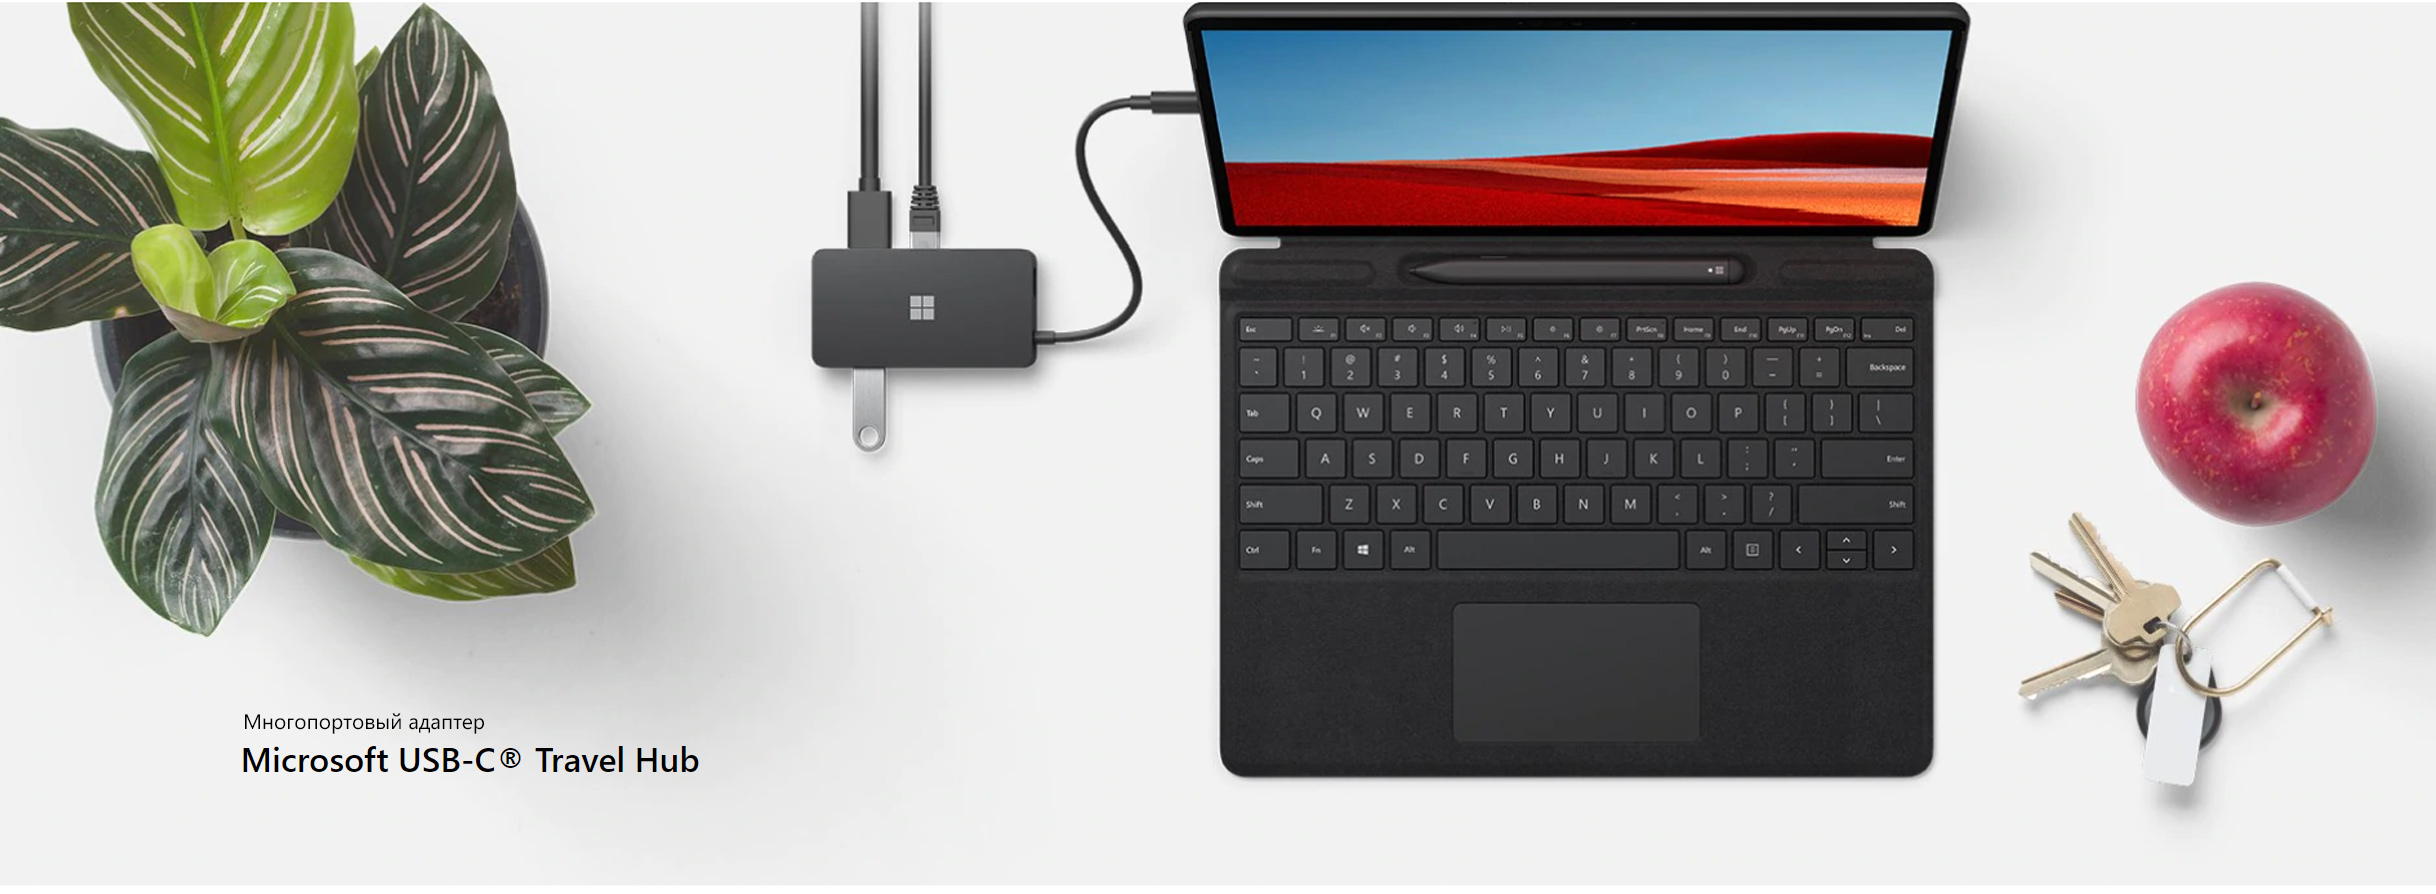 Microsoft USB-C Travel Hub - многопортовый адаптер для устройств с разъемом USB-C